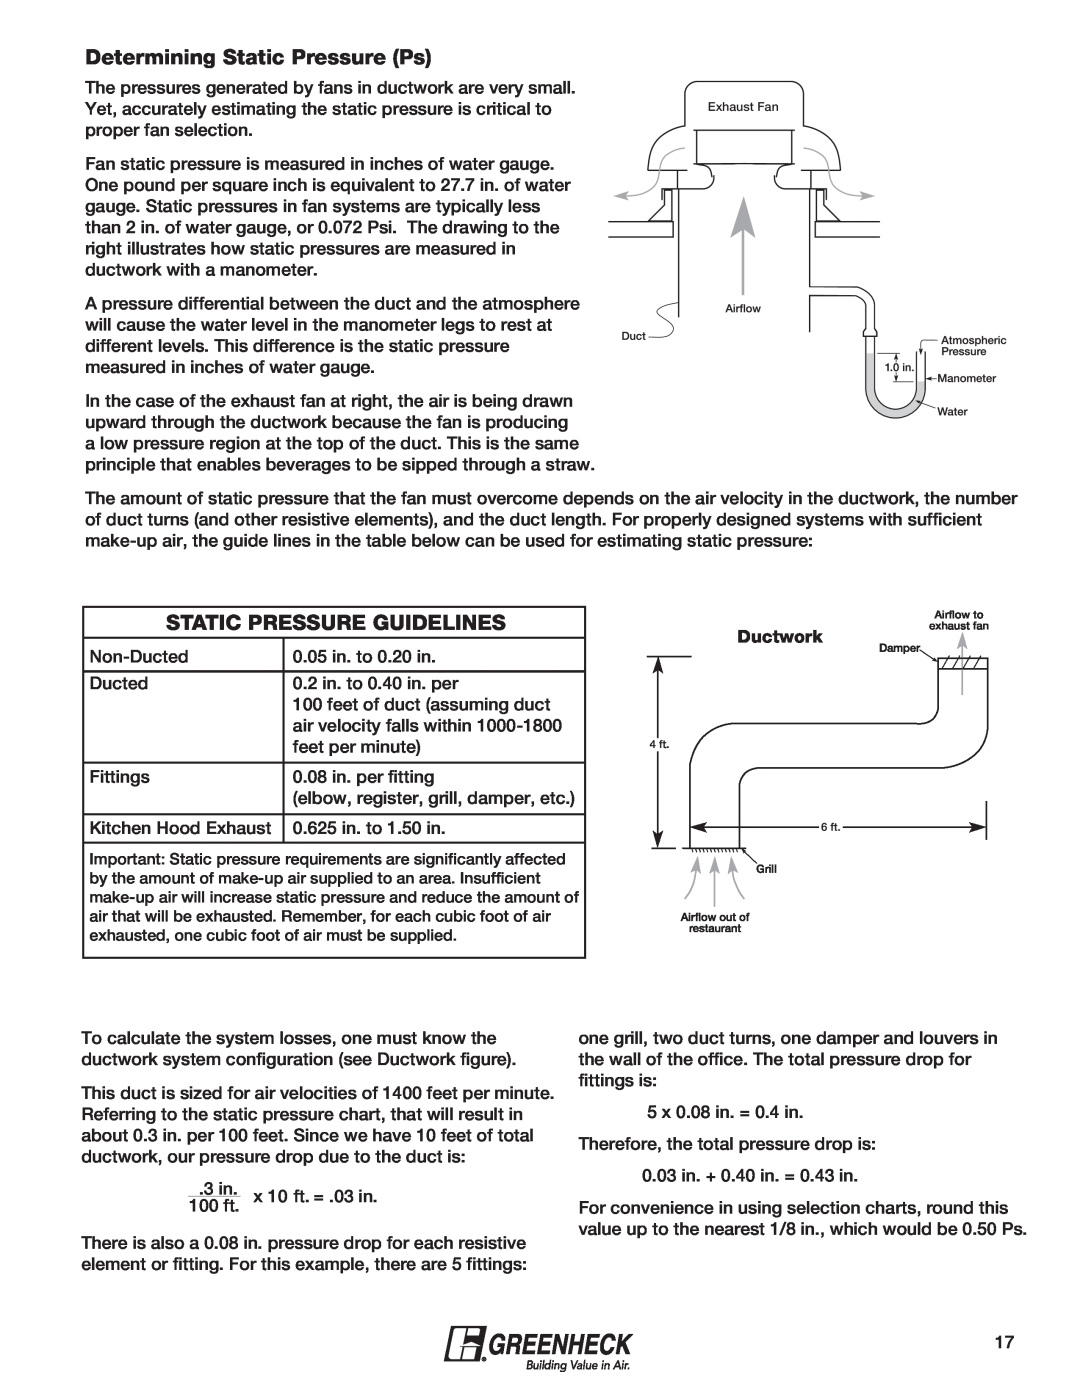 Greenheck Fan 240XP-CUb manual Determining Static Pressure Ps, Static Pressure Guidelines, Ductwork 